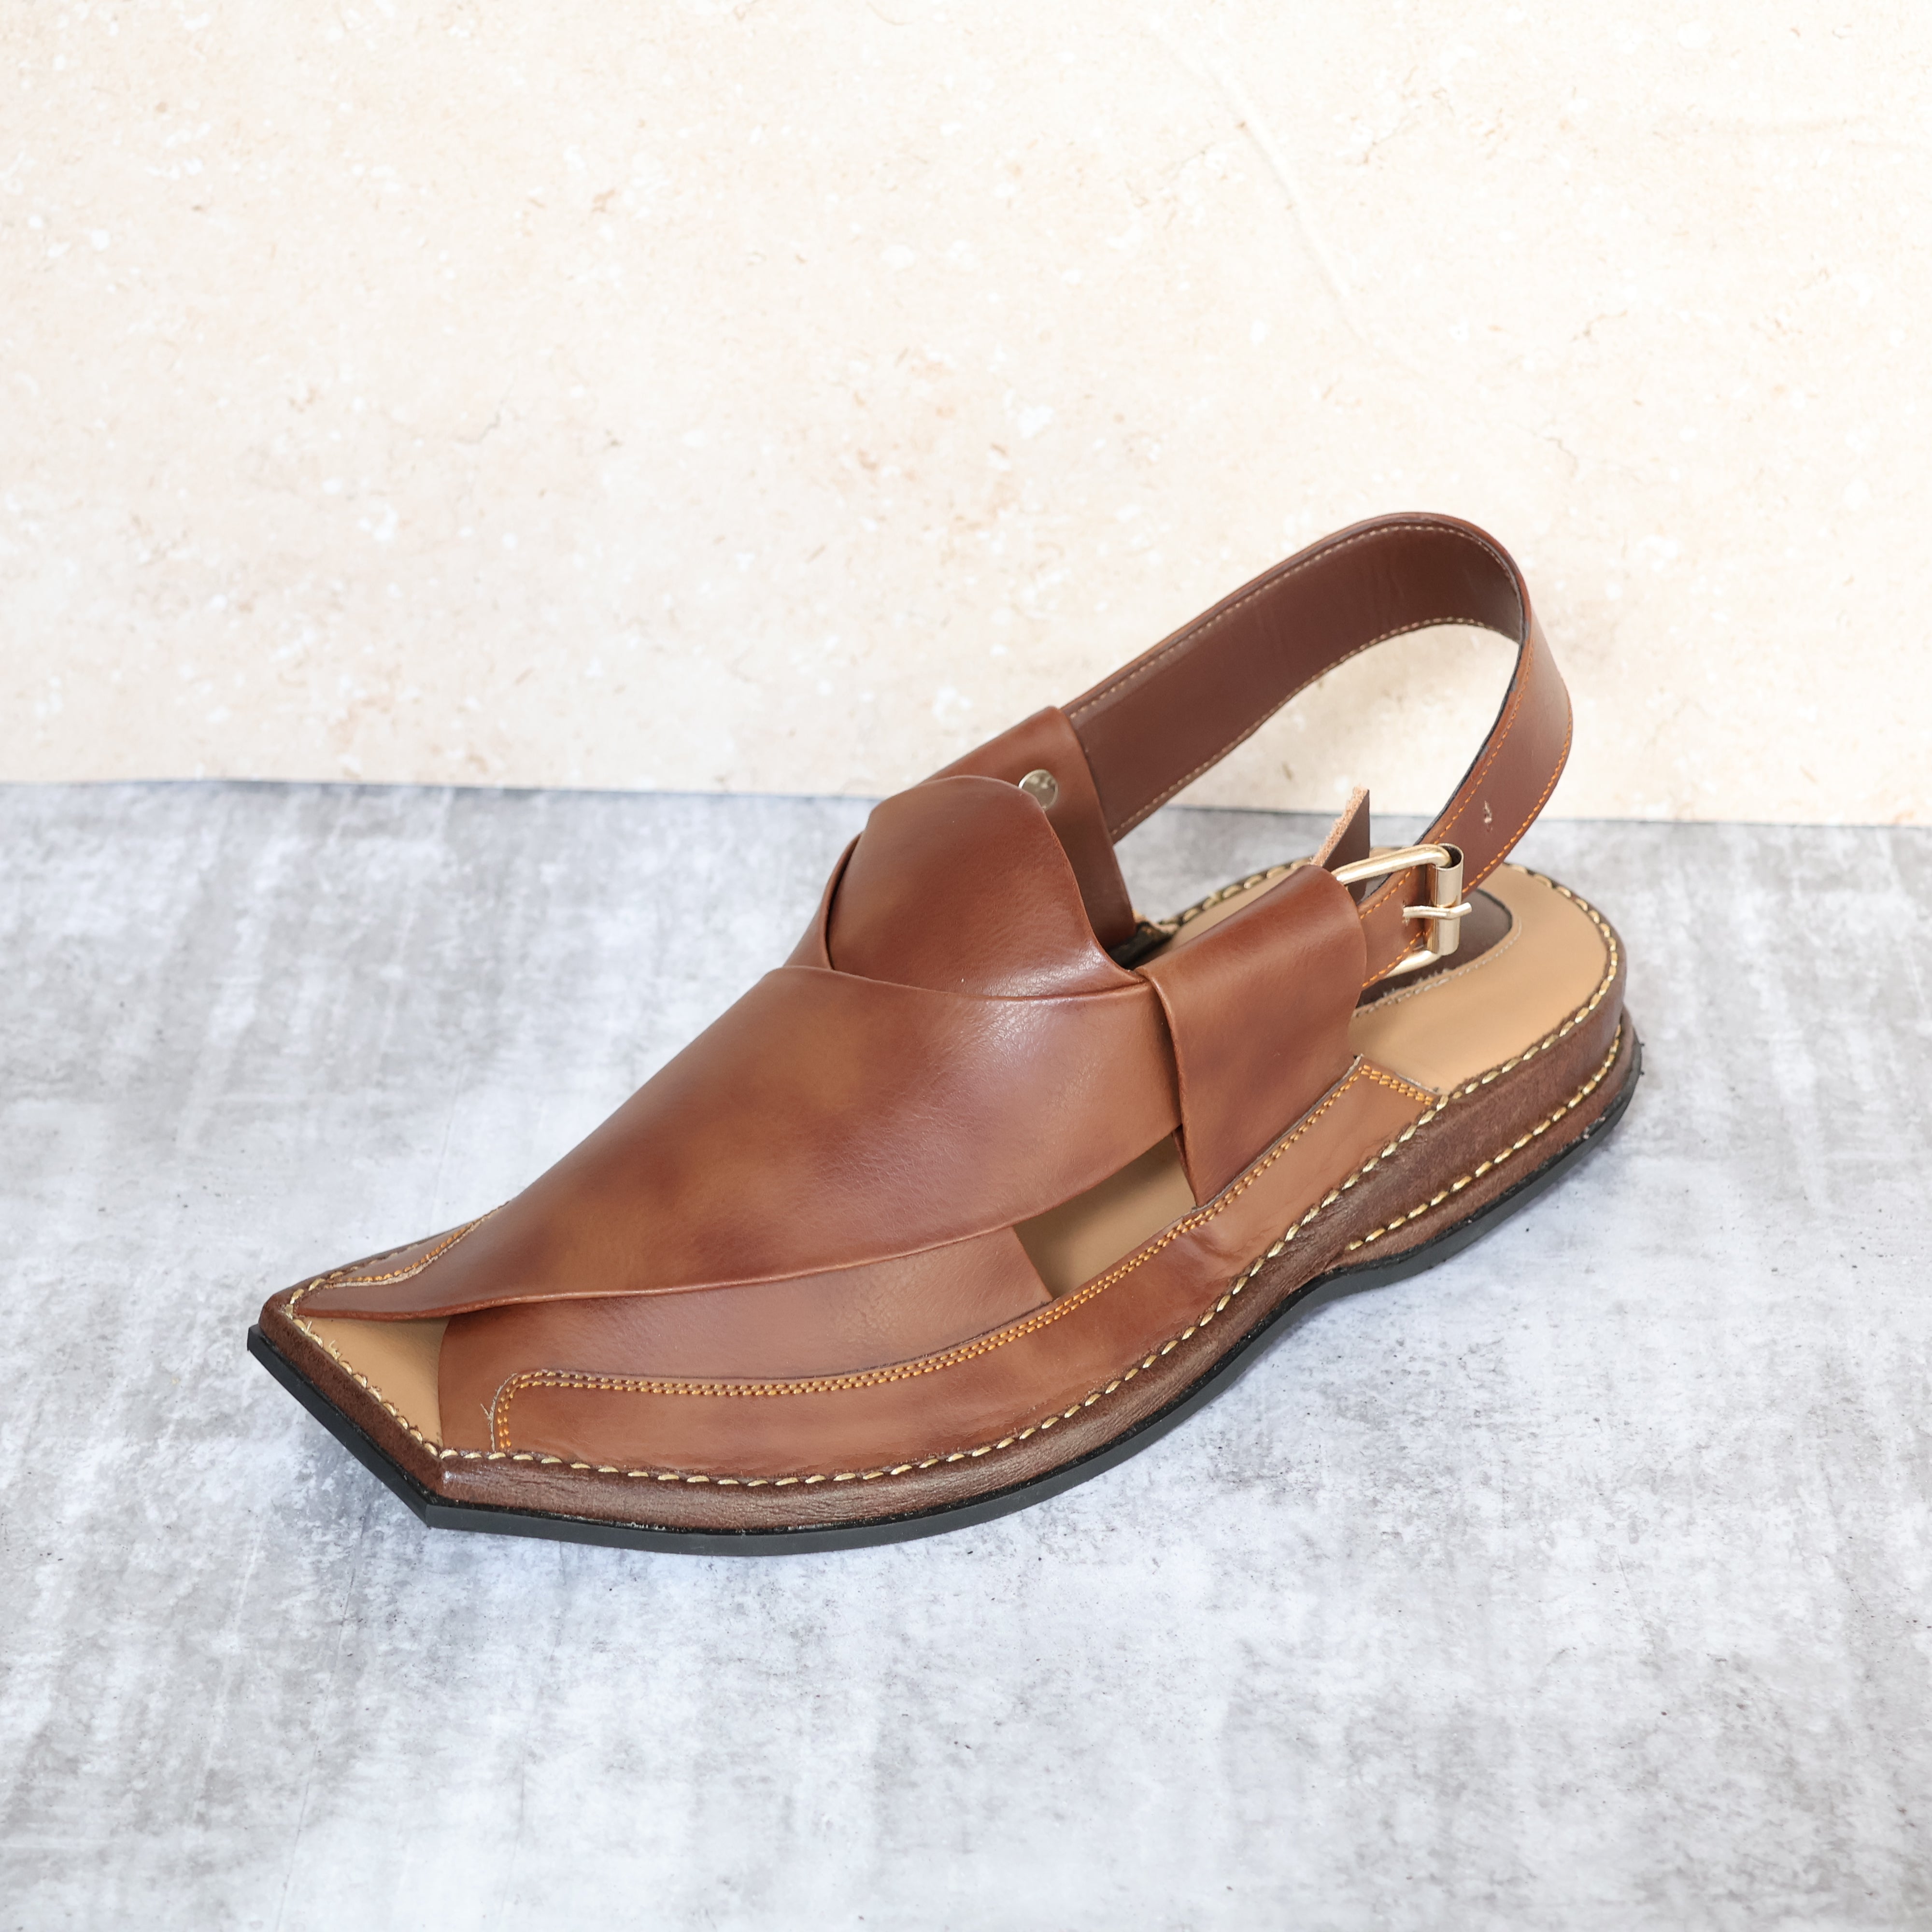 Leather Sandals, Men's, Handmade, Peshawari Chappal, Rubber Sole, Comfort Padding, Polished Brown